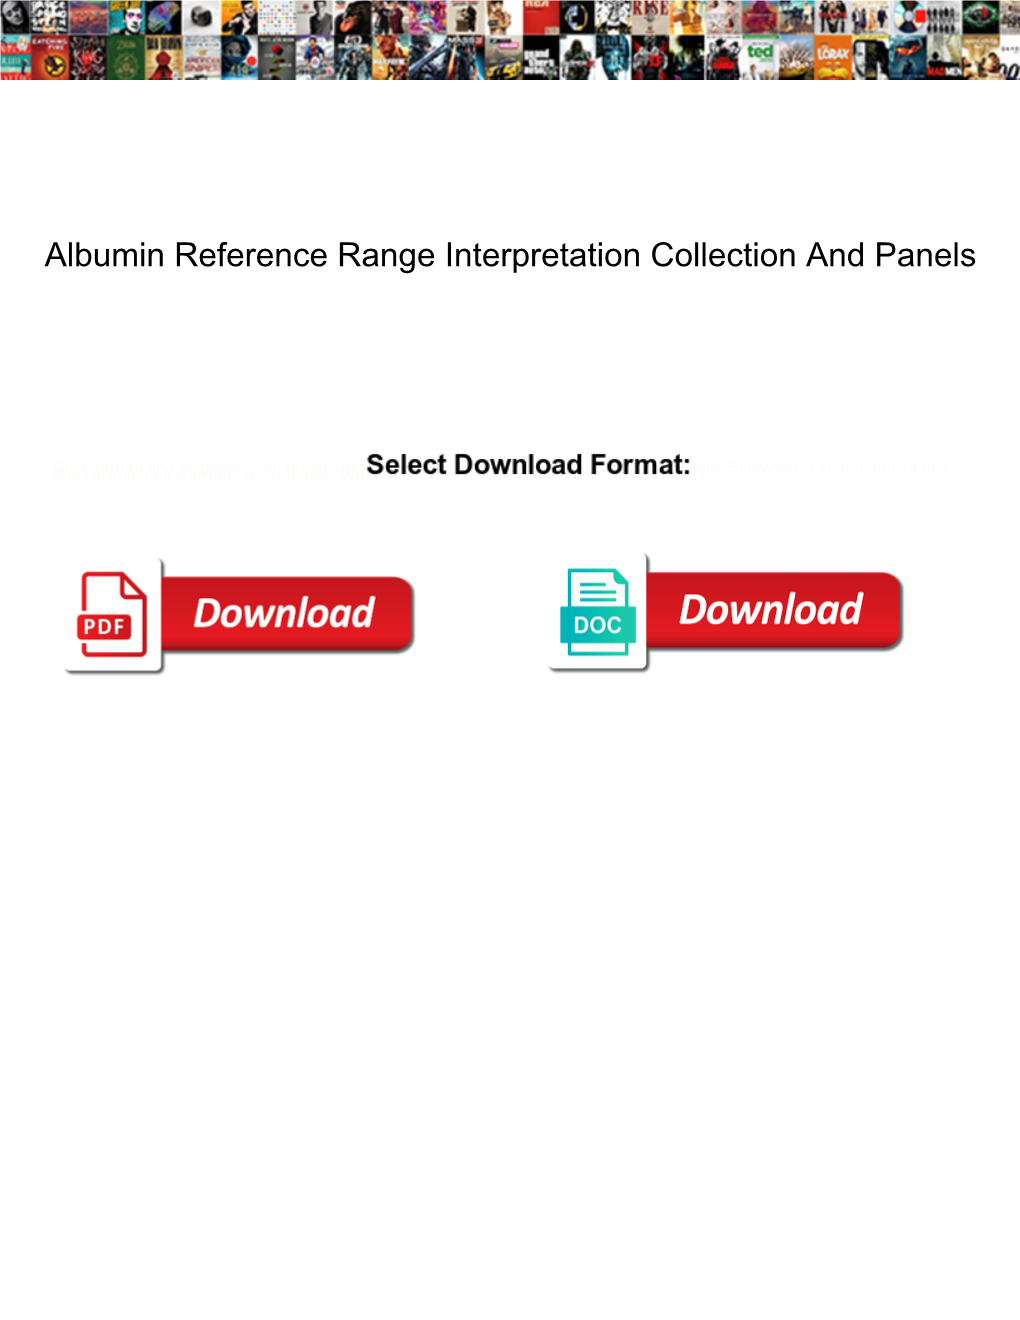 Albumin Reference Range Interpretation Collection and Panels